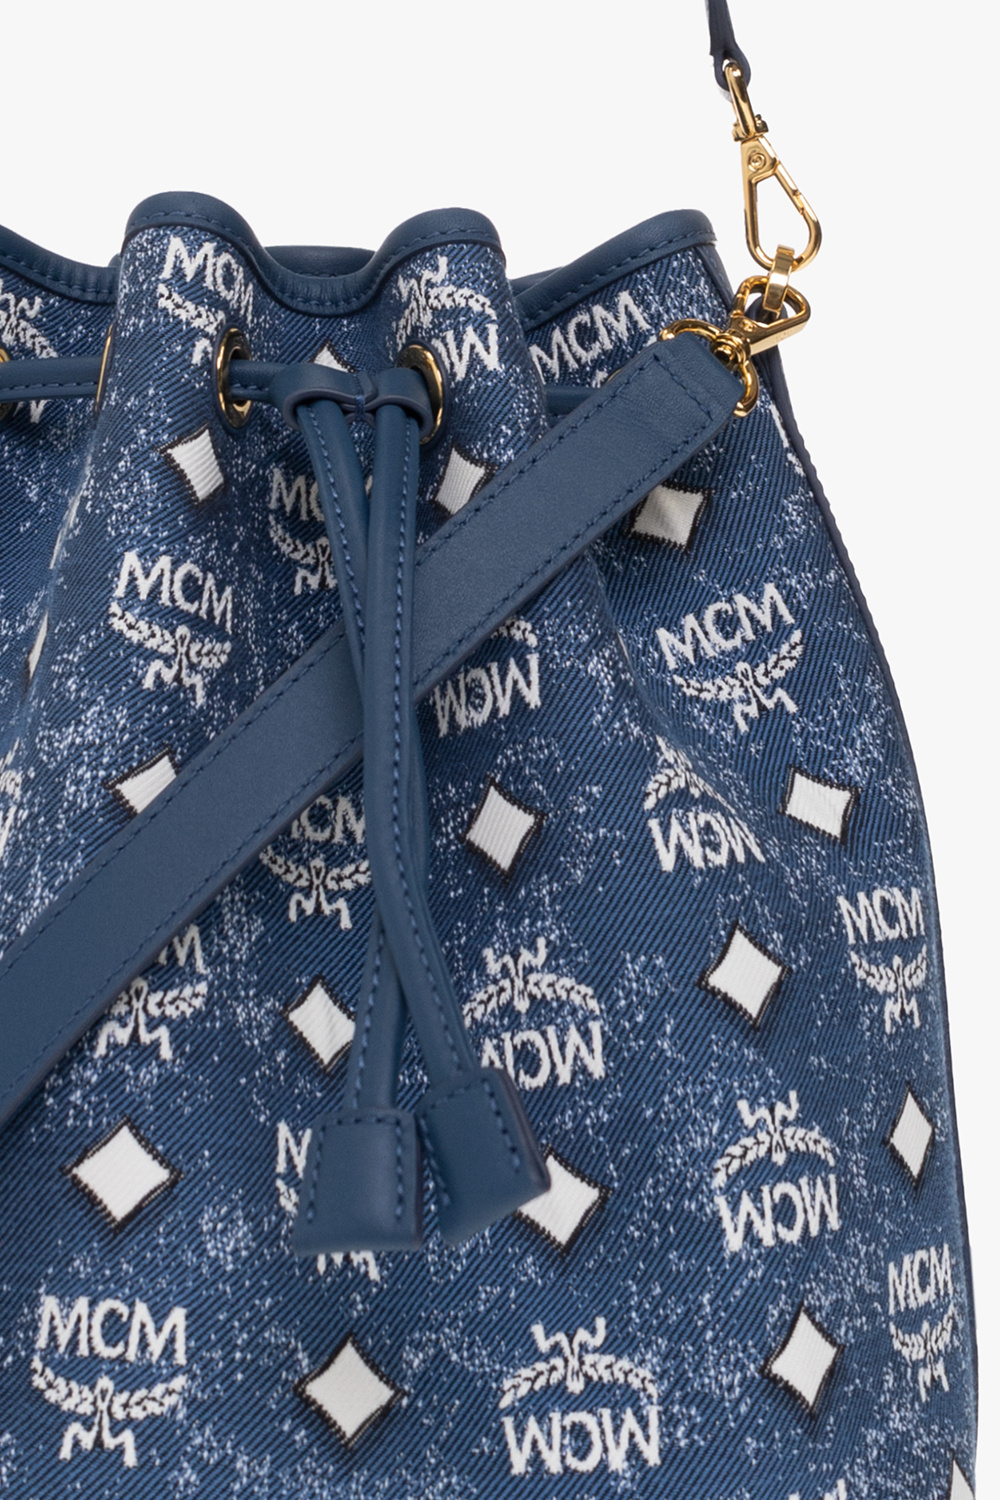 Louis Vuitton women shoes - clothing & accessories - by owner - apparel sale  - craigslist